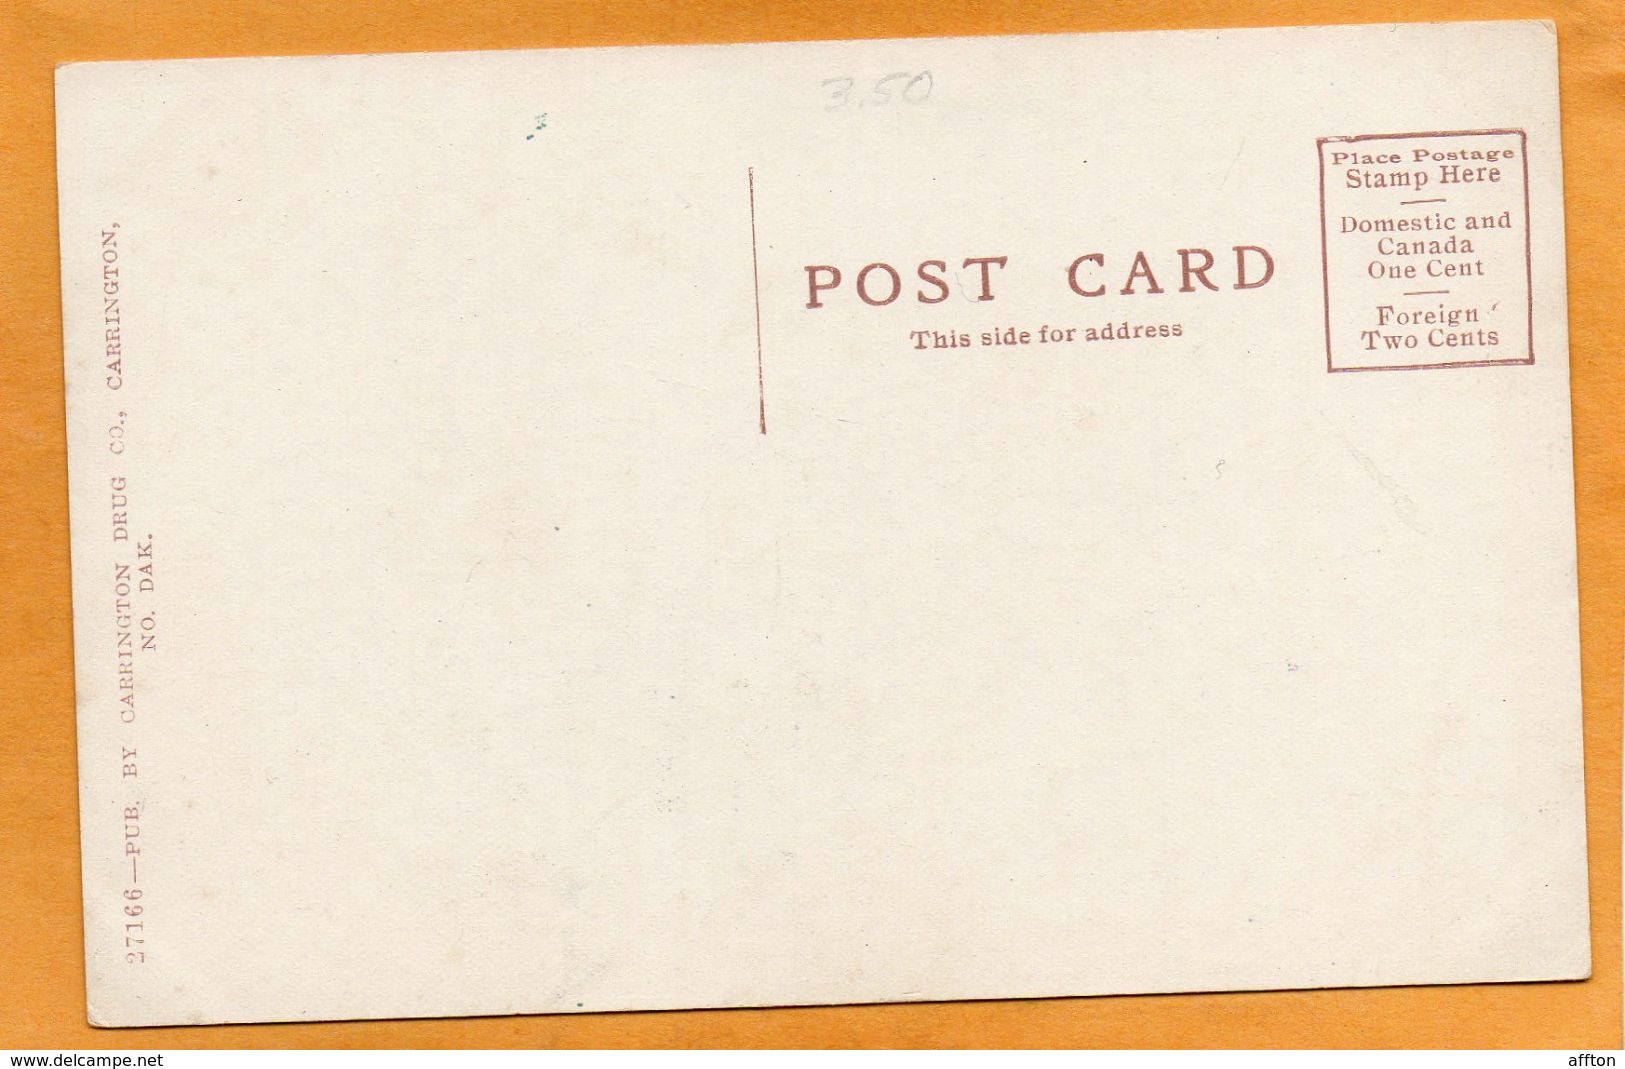 Carrington ND 1905 Postcard - Dickinson